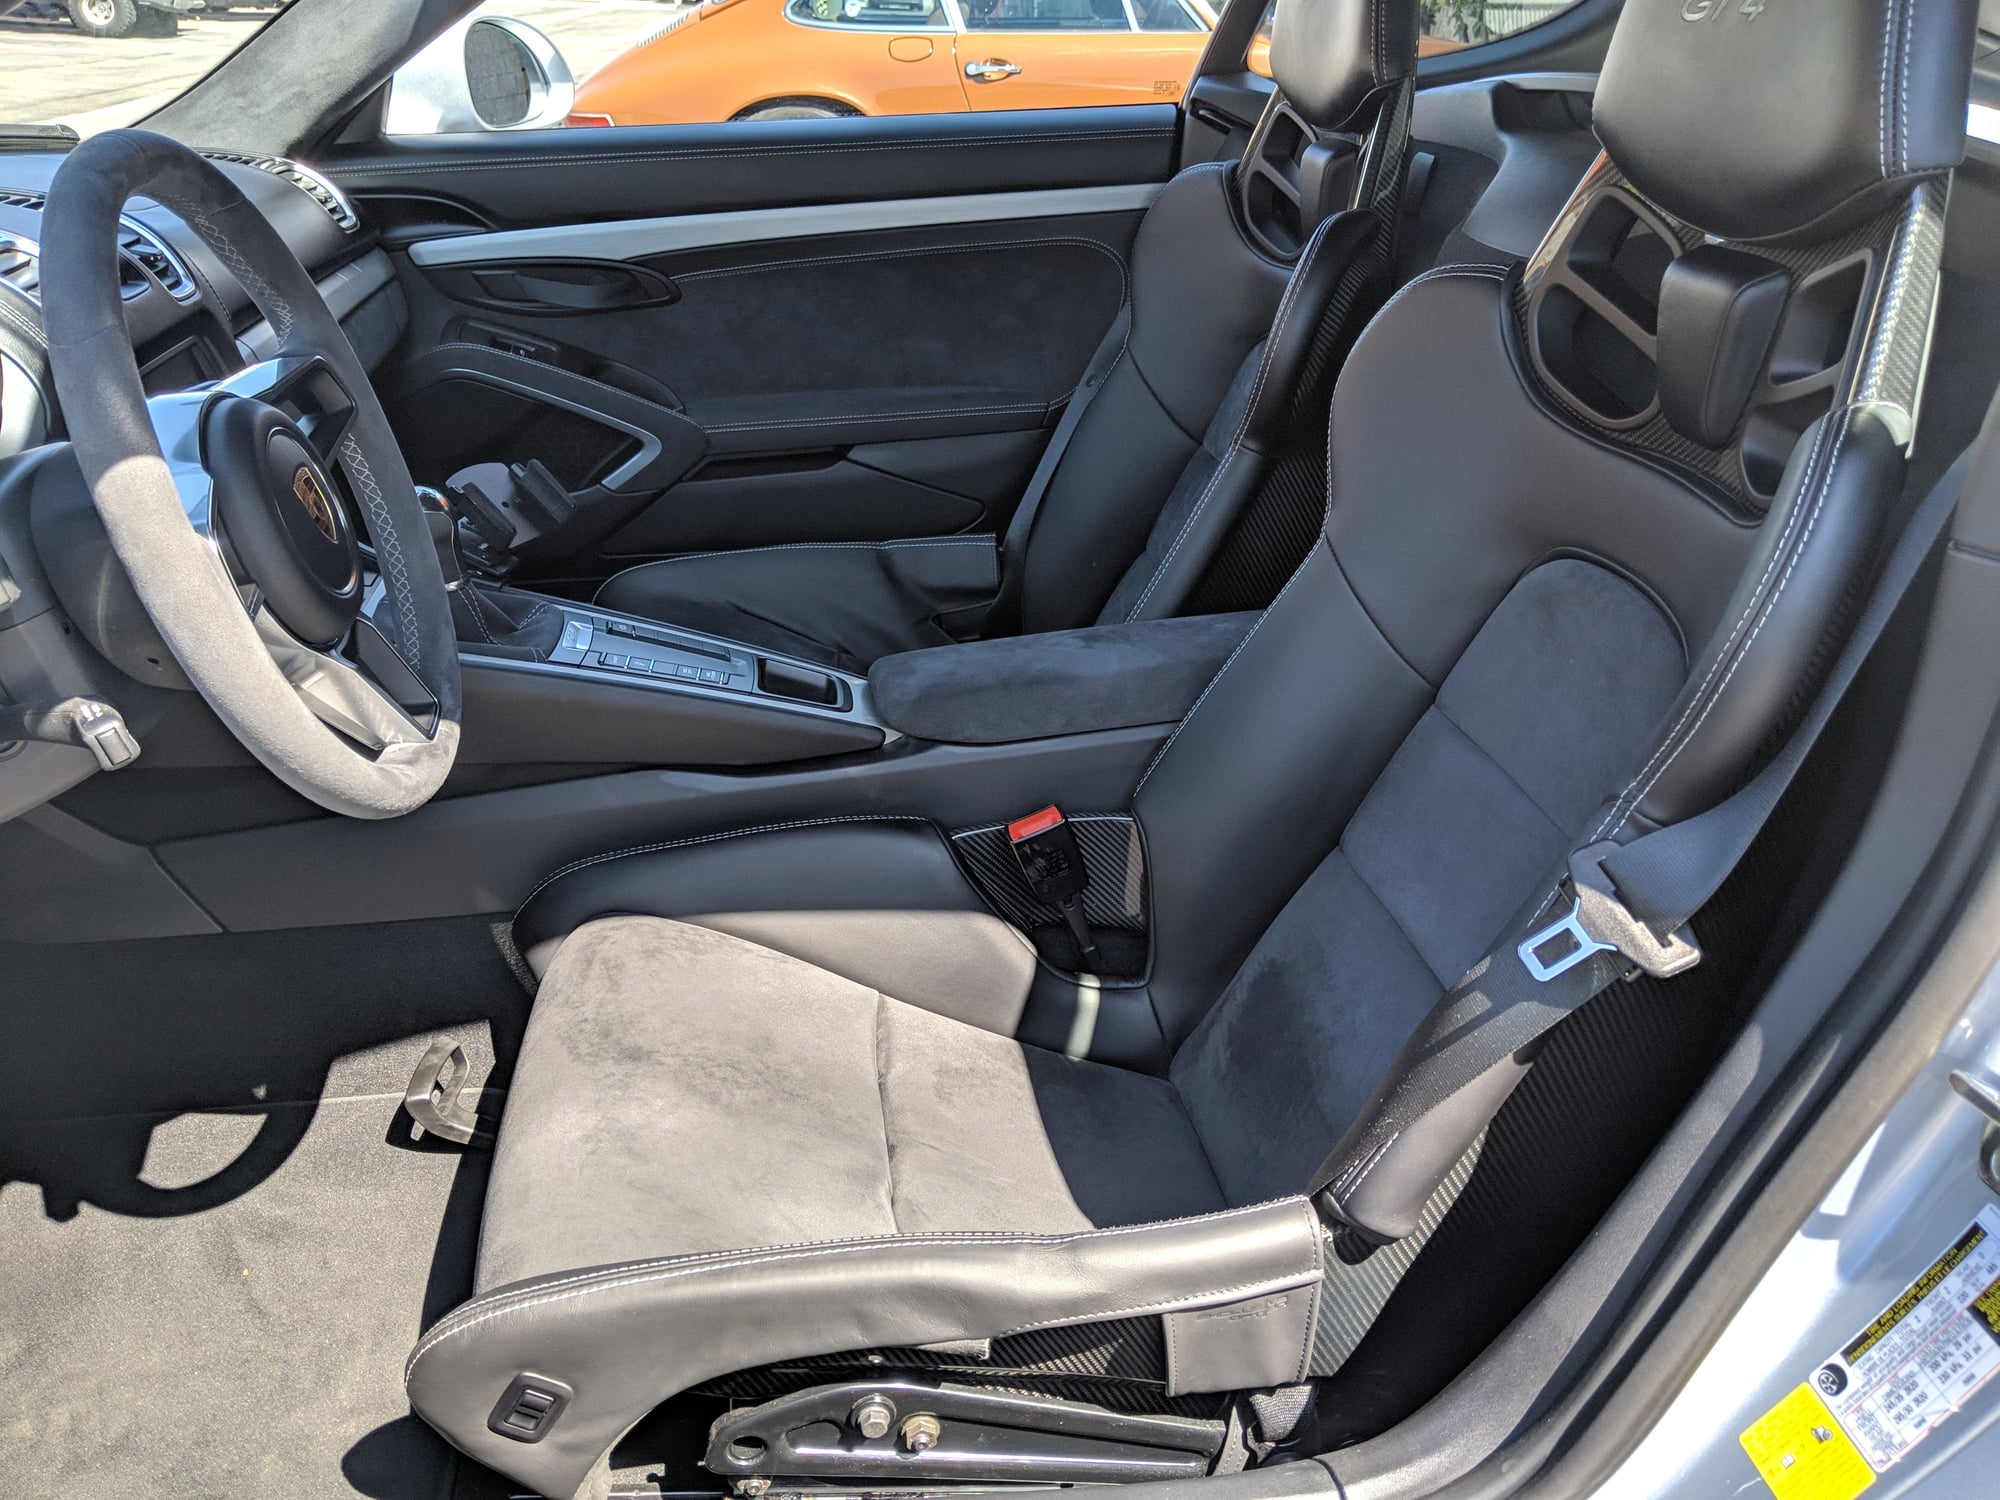 Interior/Upholstery - 981 GT4 LWB - Carbon Lightweight Bucket Seats /w Platinum Stitch + fire extinguisher - Used - 2016 Porsche Cayman GT4 - Gardena, CA 90249, United States